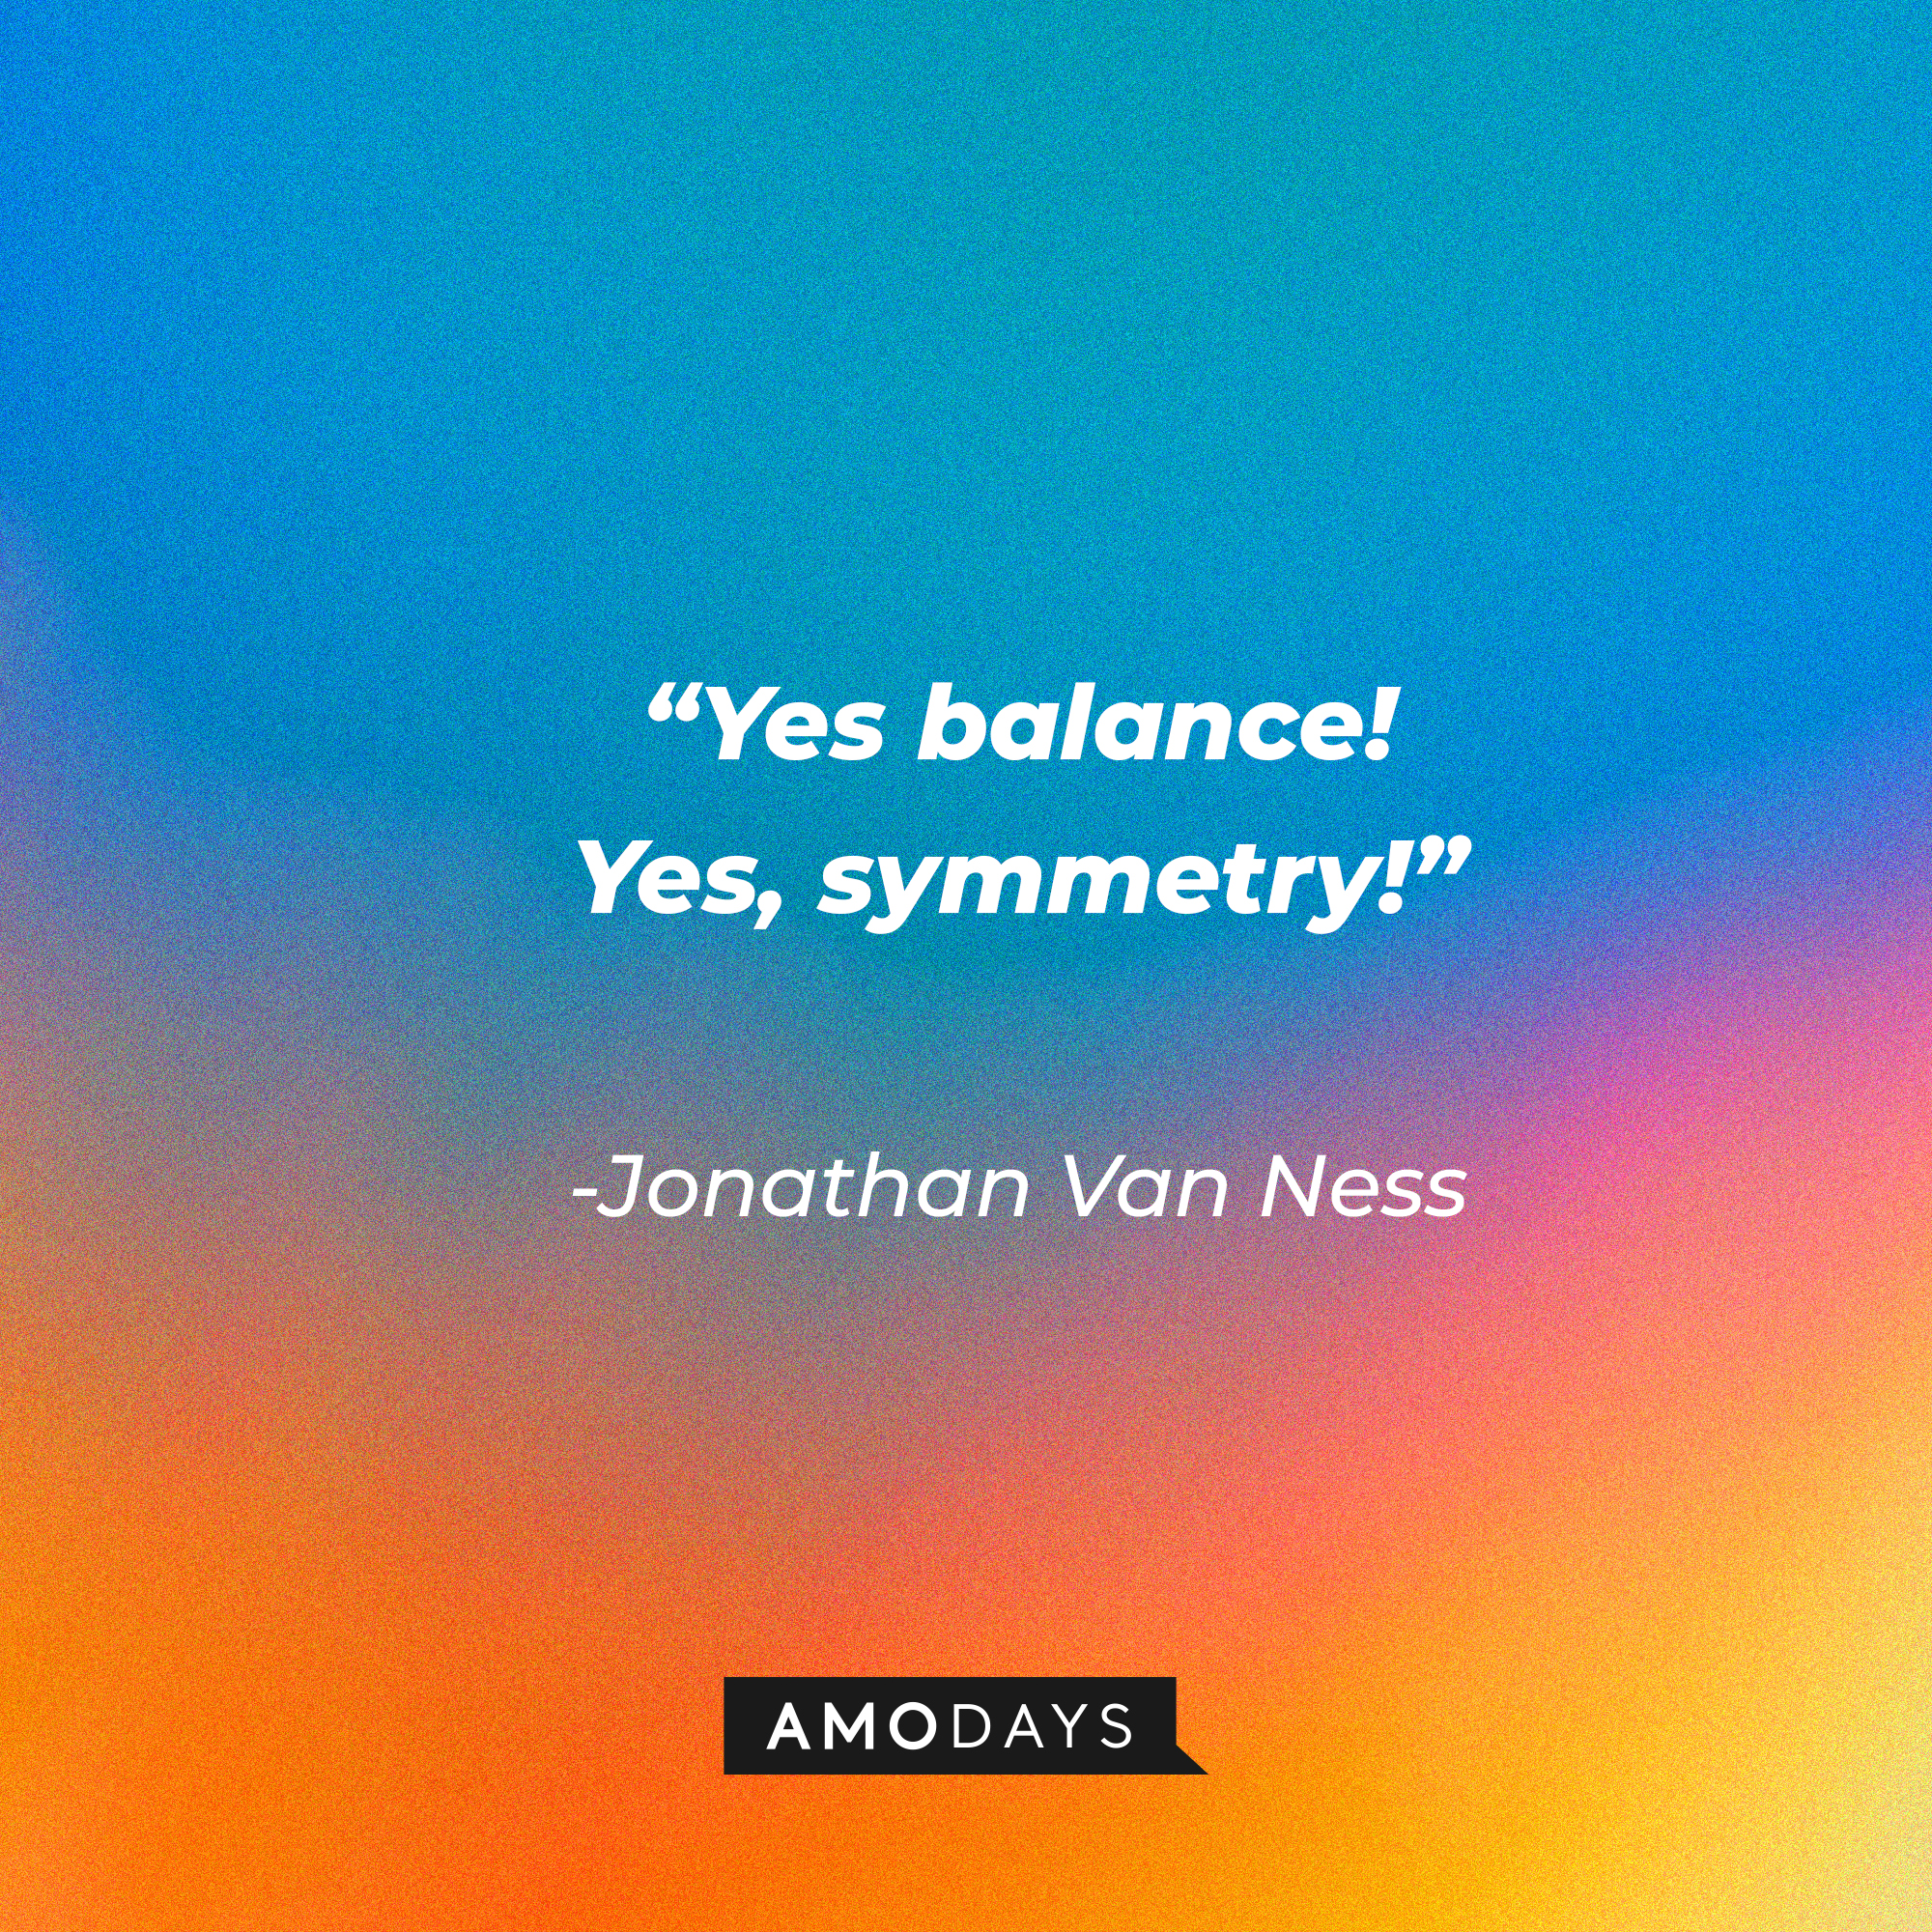 Jonathan Van Ness’s quote: “Yes balance! Yes, symmetry!” | Source: AmoDays